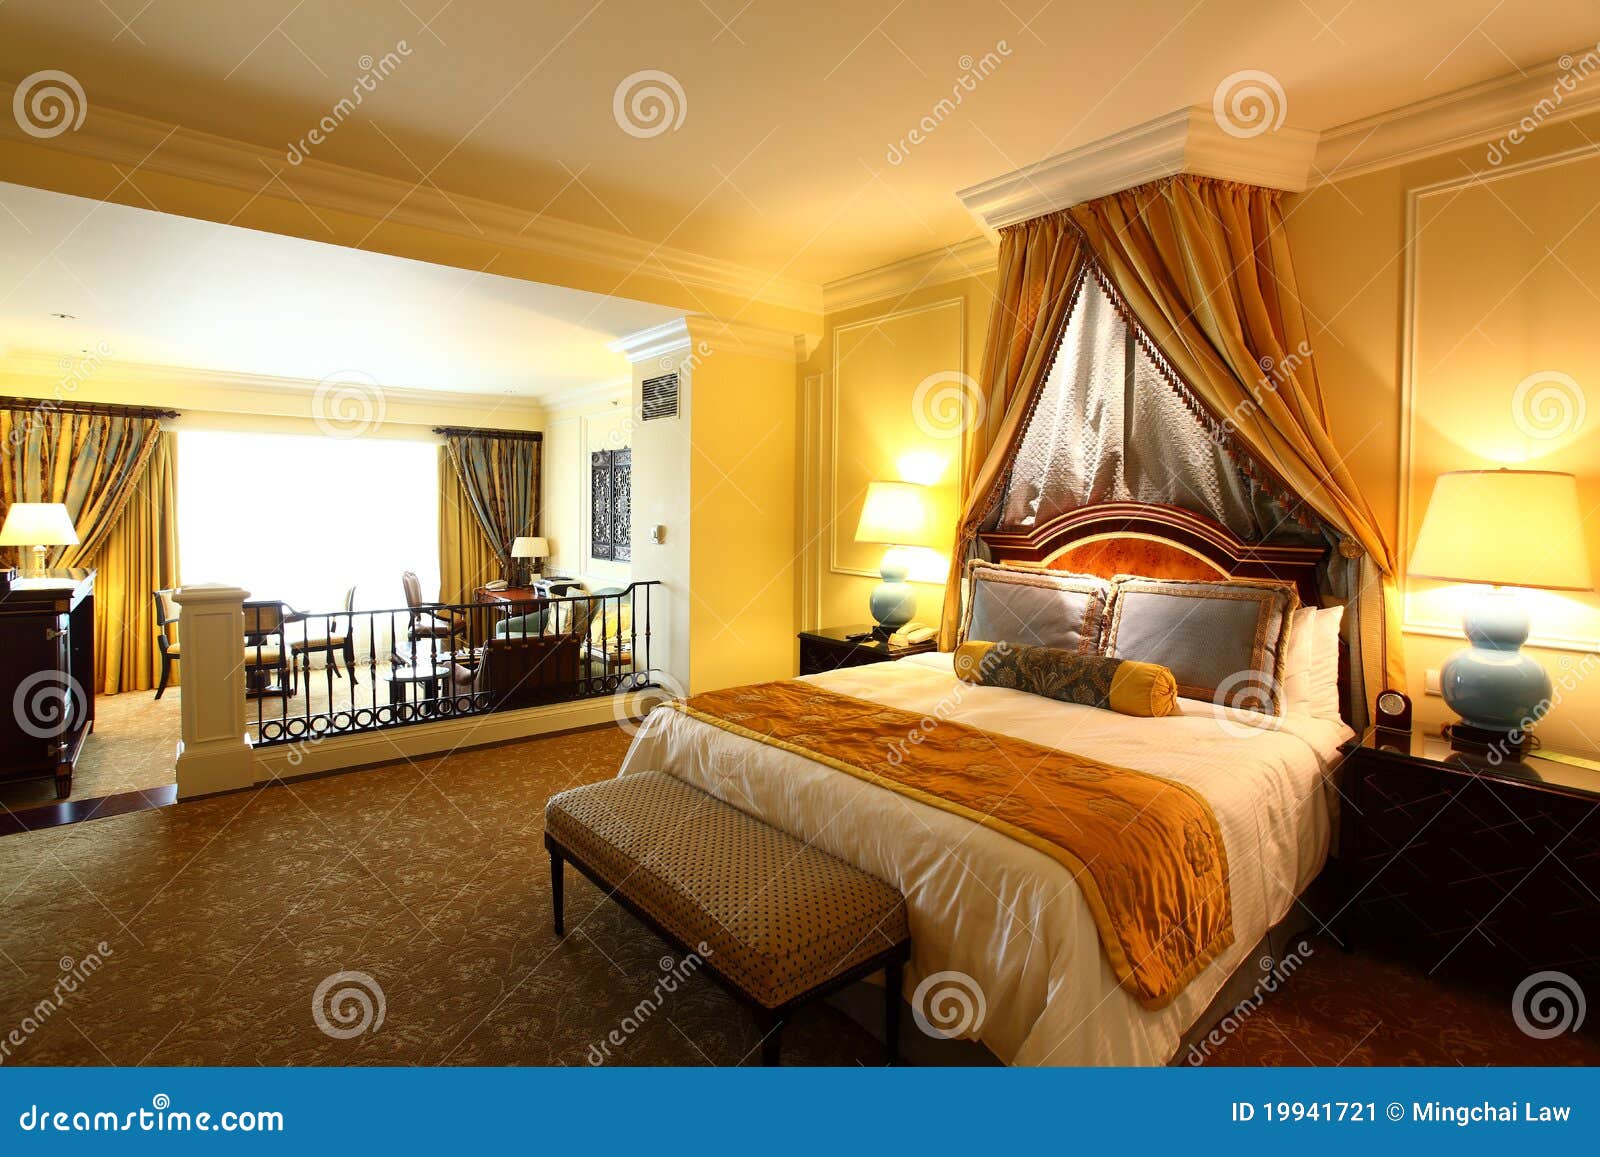 Hotel Room stock image. Image of indoors, interior, blanket - 19941721